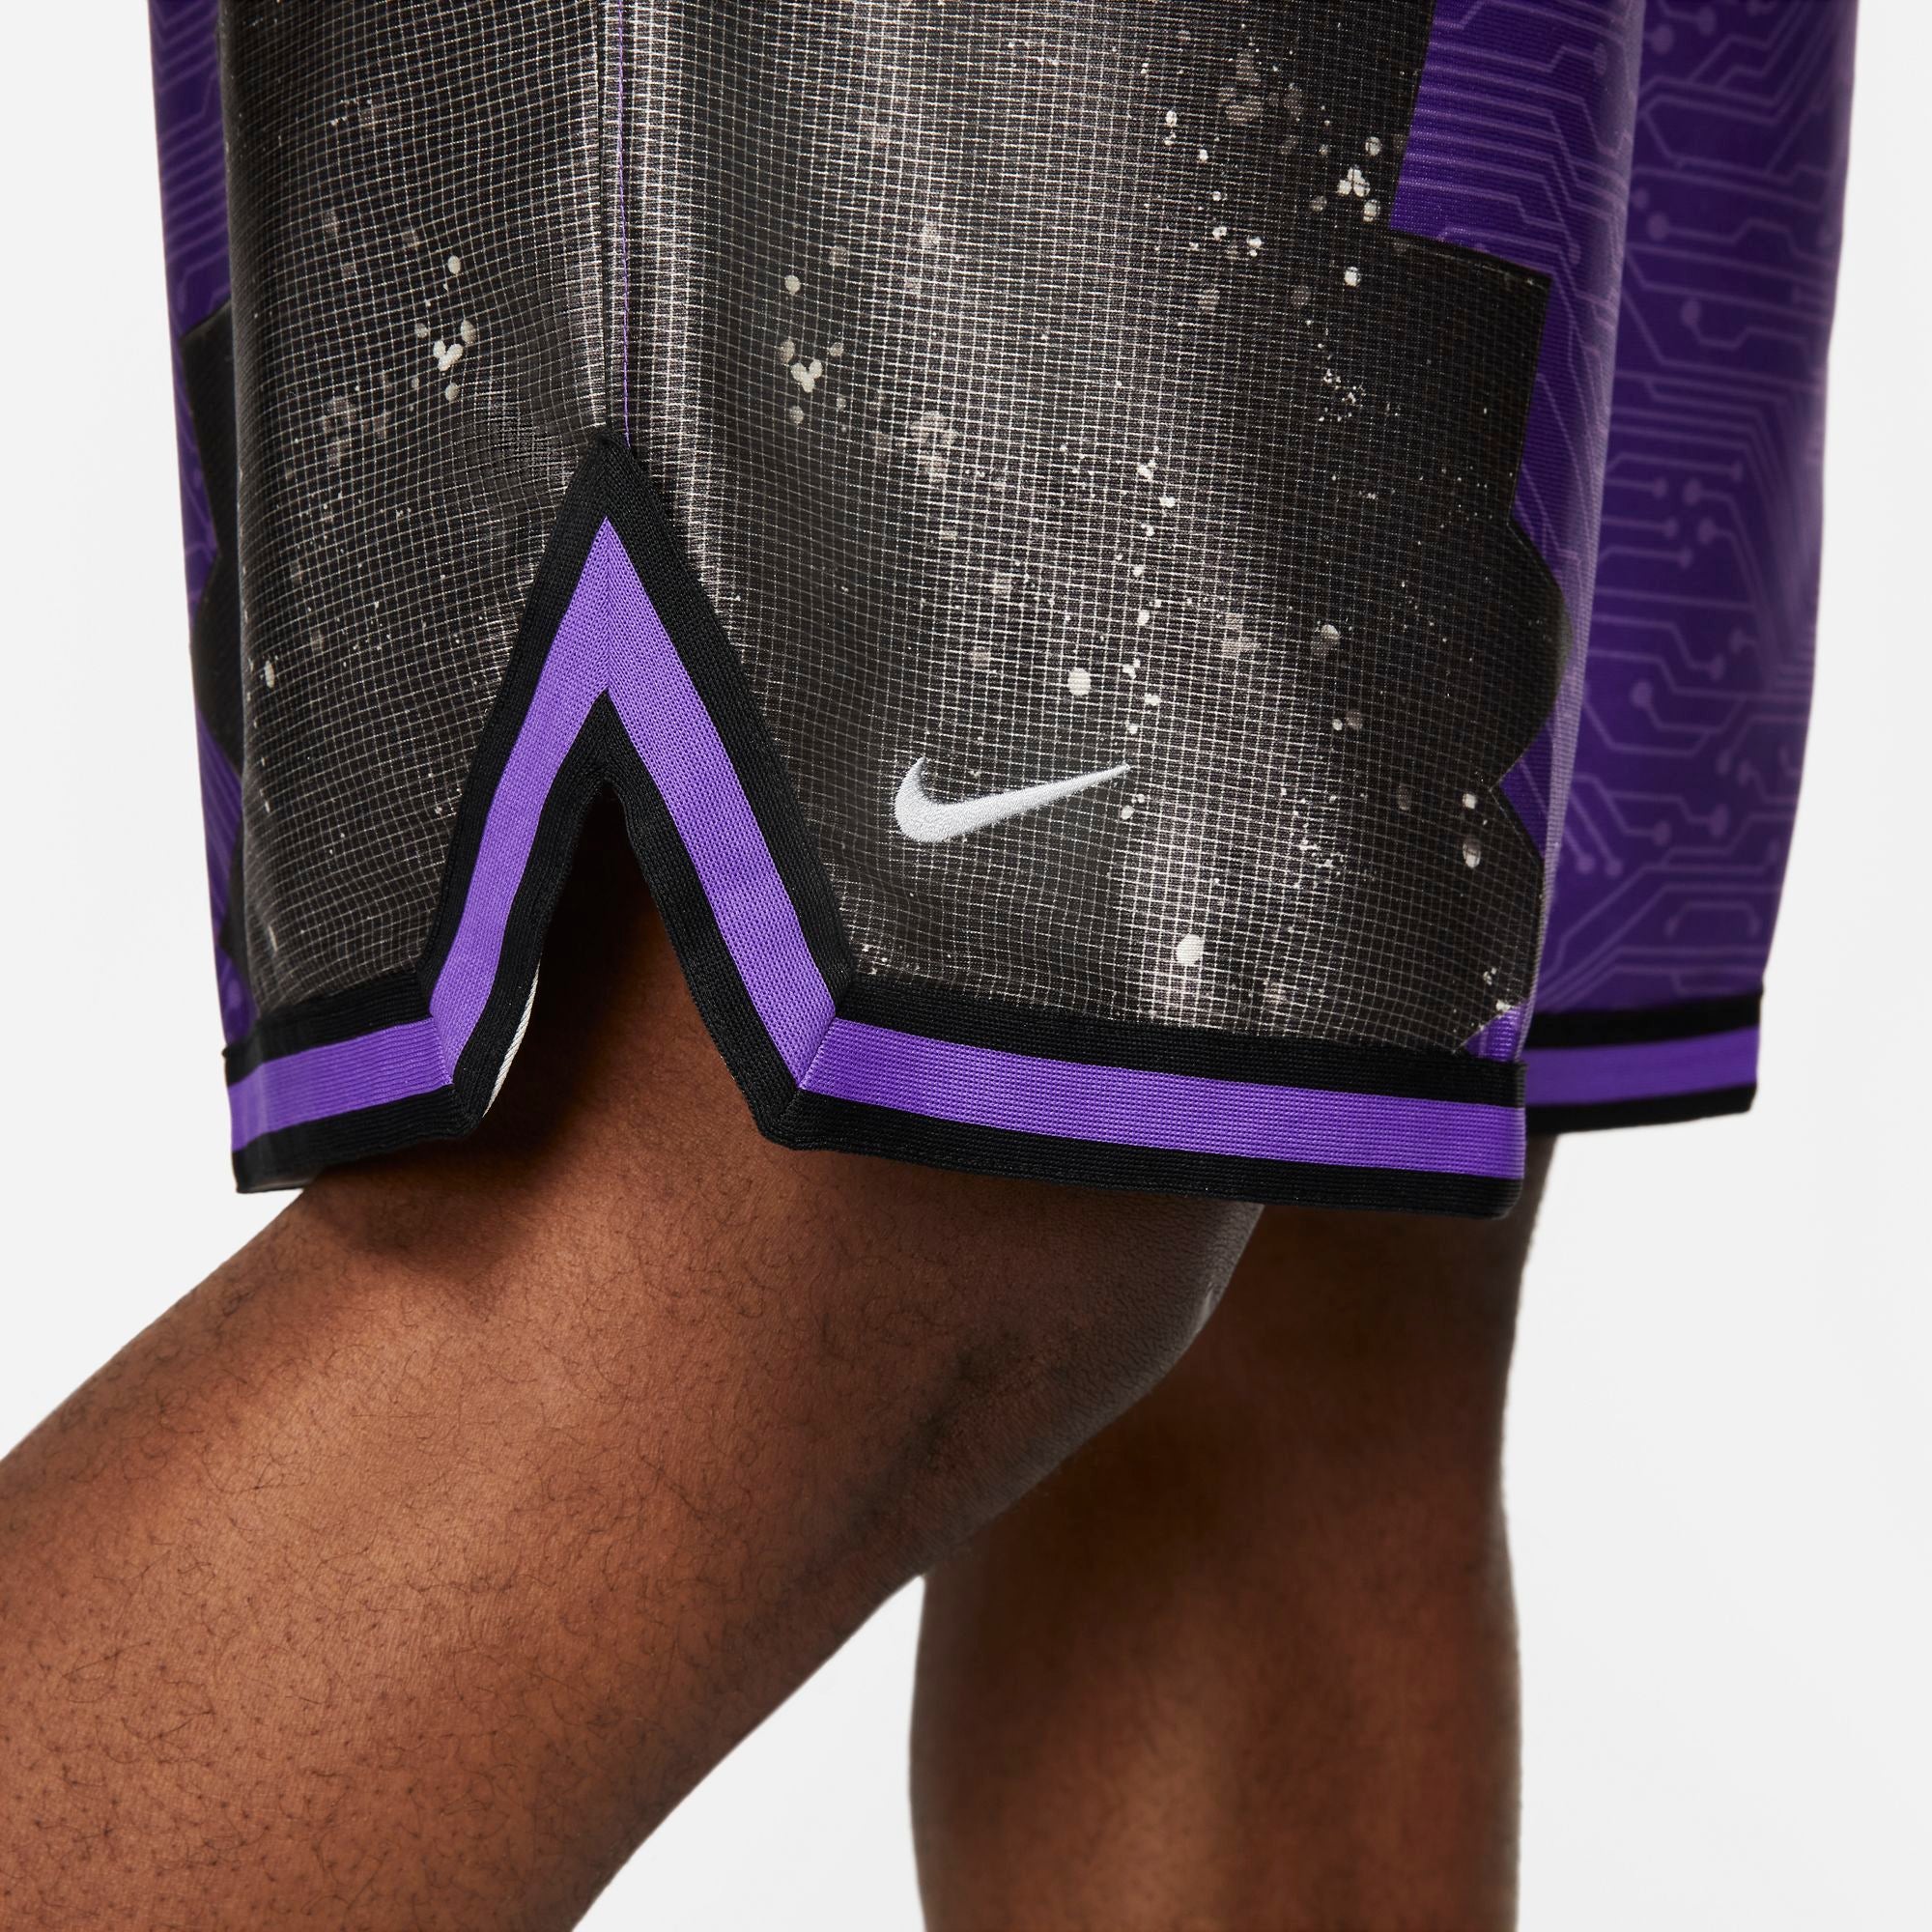 Nike Lebron X Space Jam: A New Legacy "Goon Squad" Basketball Shorts - Hyper Grape/Black/Wolf Grey NK-DJ3875-560